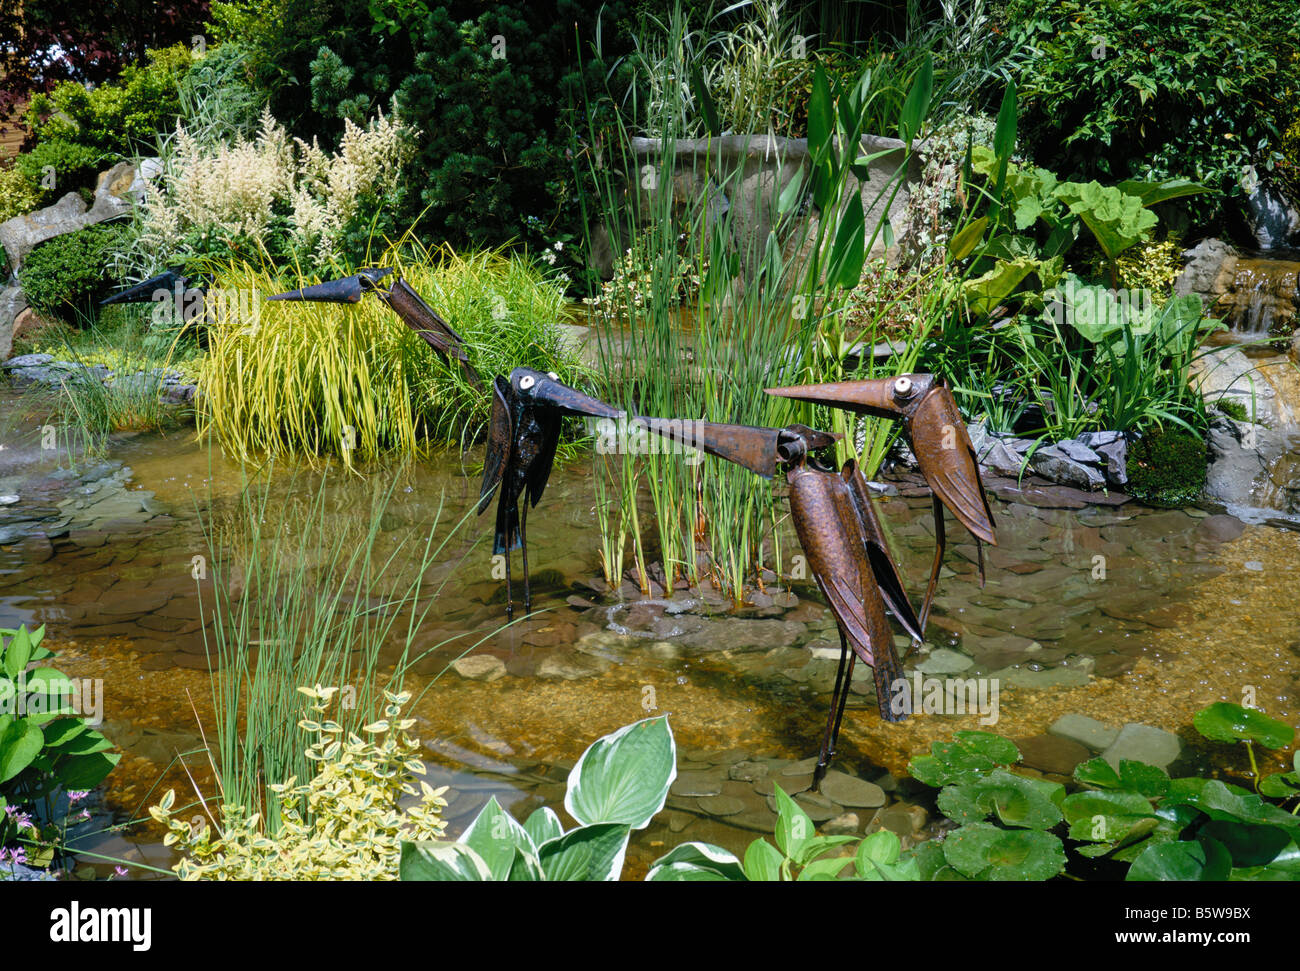 Wildlife pond with decorative sculptured metal birds Stock Photo